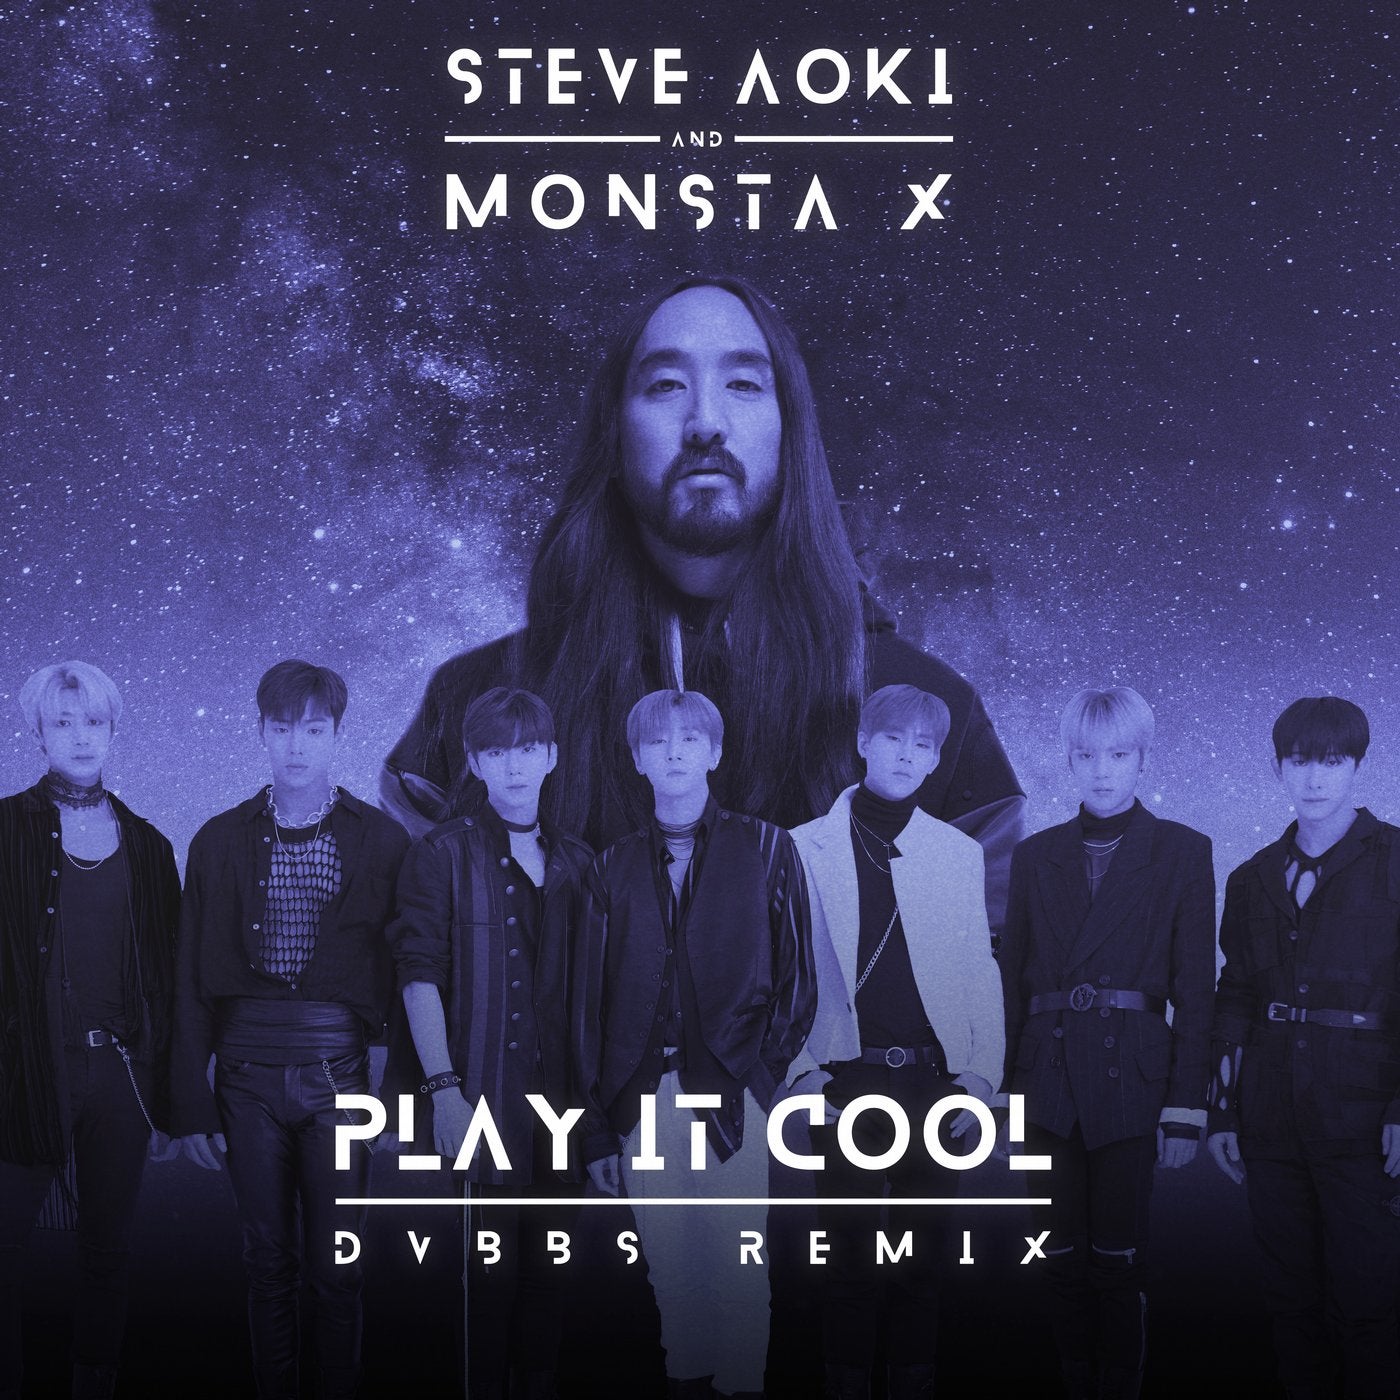 Play It Cool - DVBBS Remix